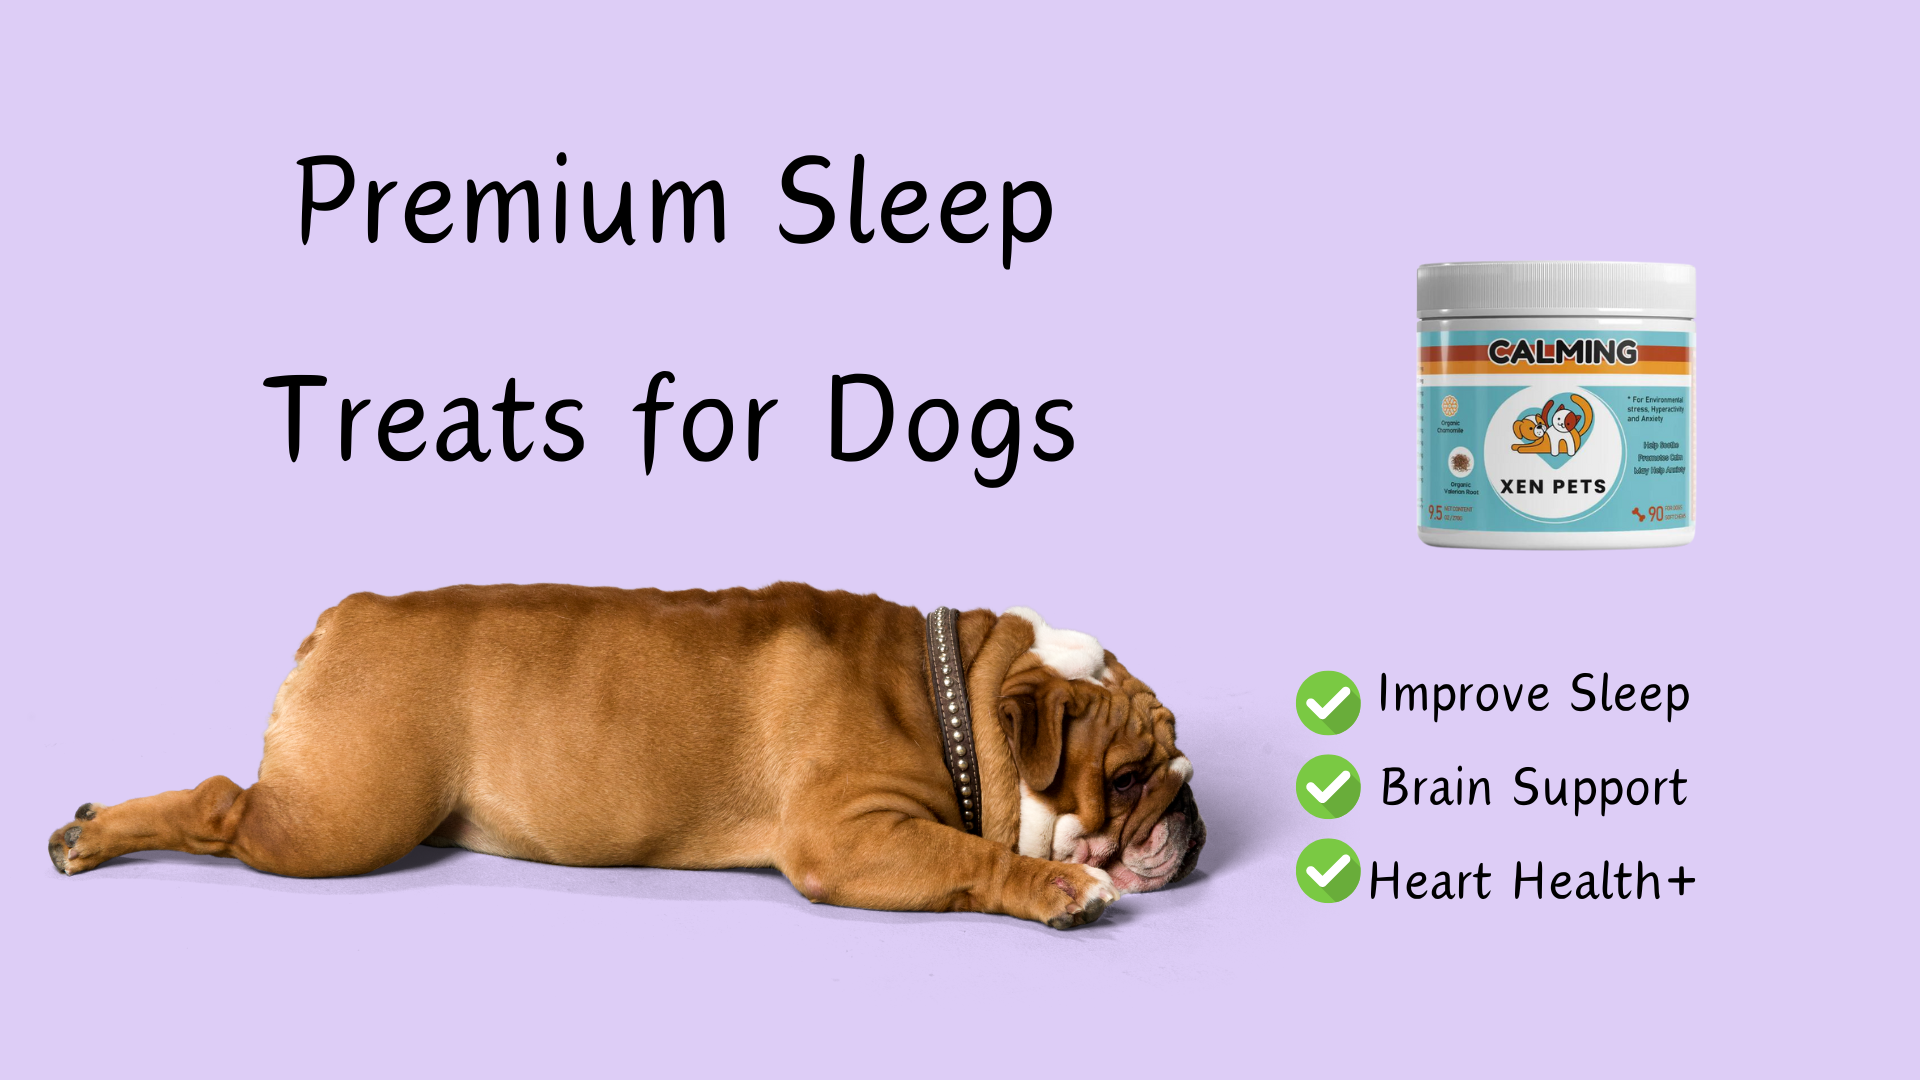 Xen Pets Premium Sleep Treats